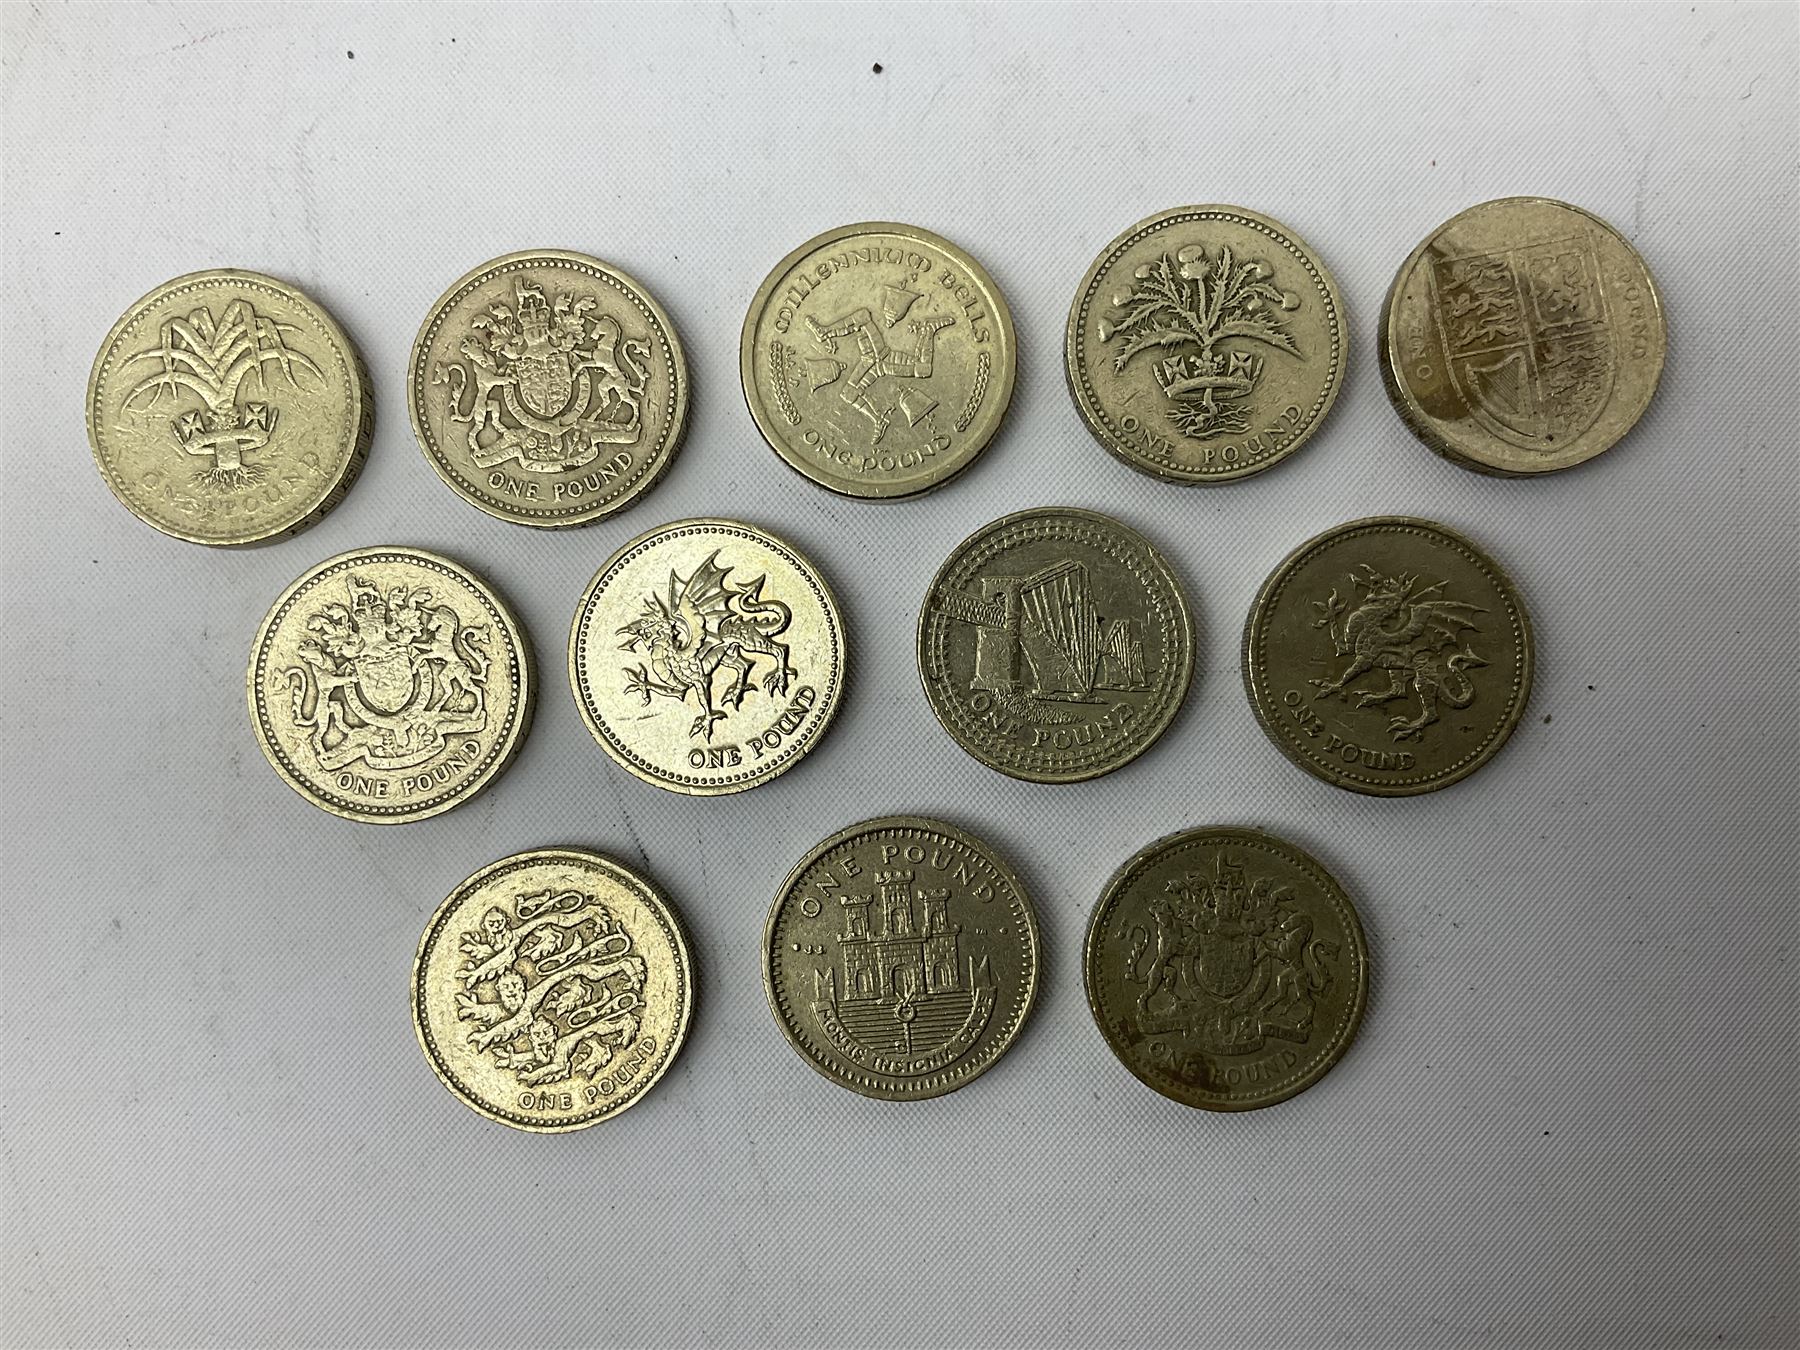 Queen Elizabeth II coinage - Image 6 of 8